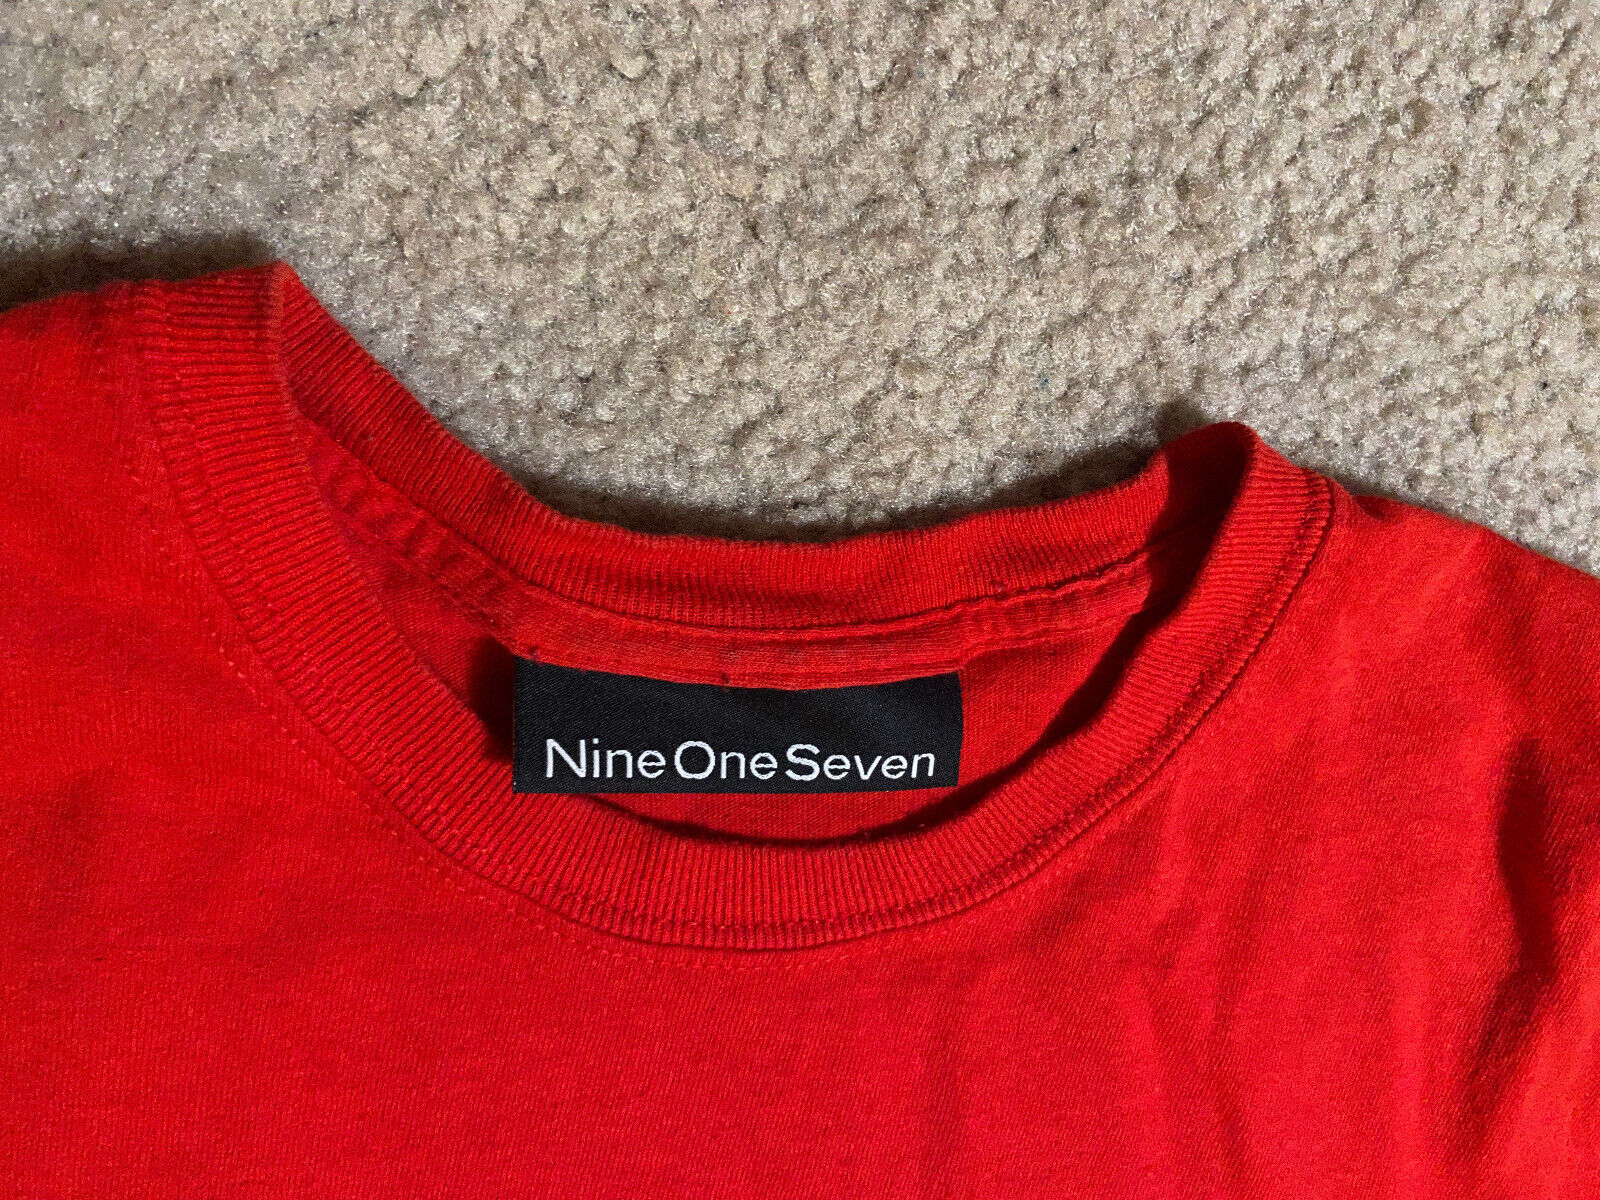 917 Nine One Seven Call Me 917 Skateboard Style T-Shirt Medium red 692 2706